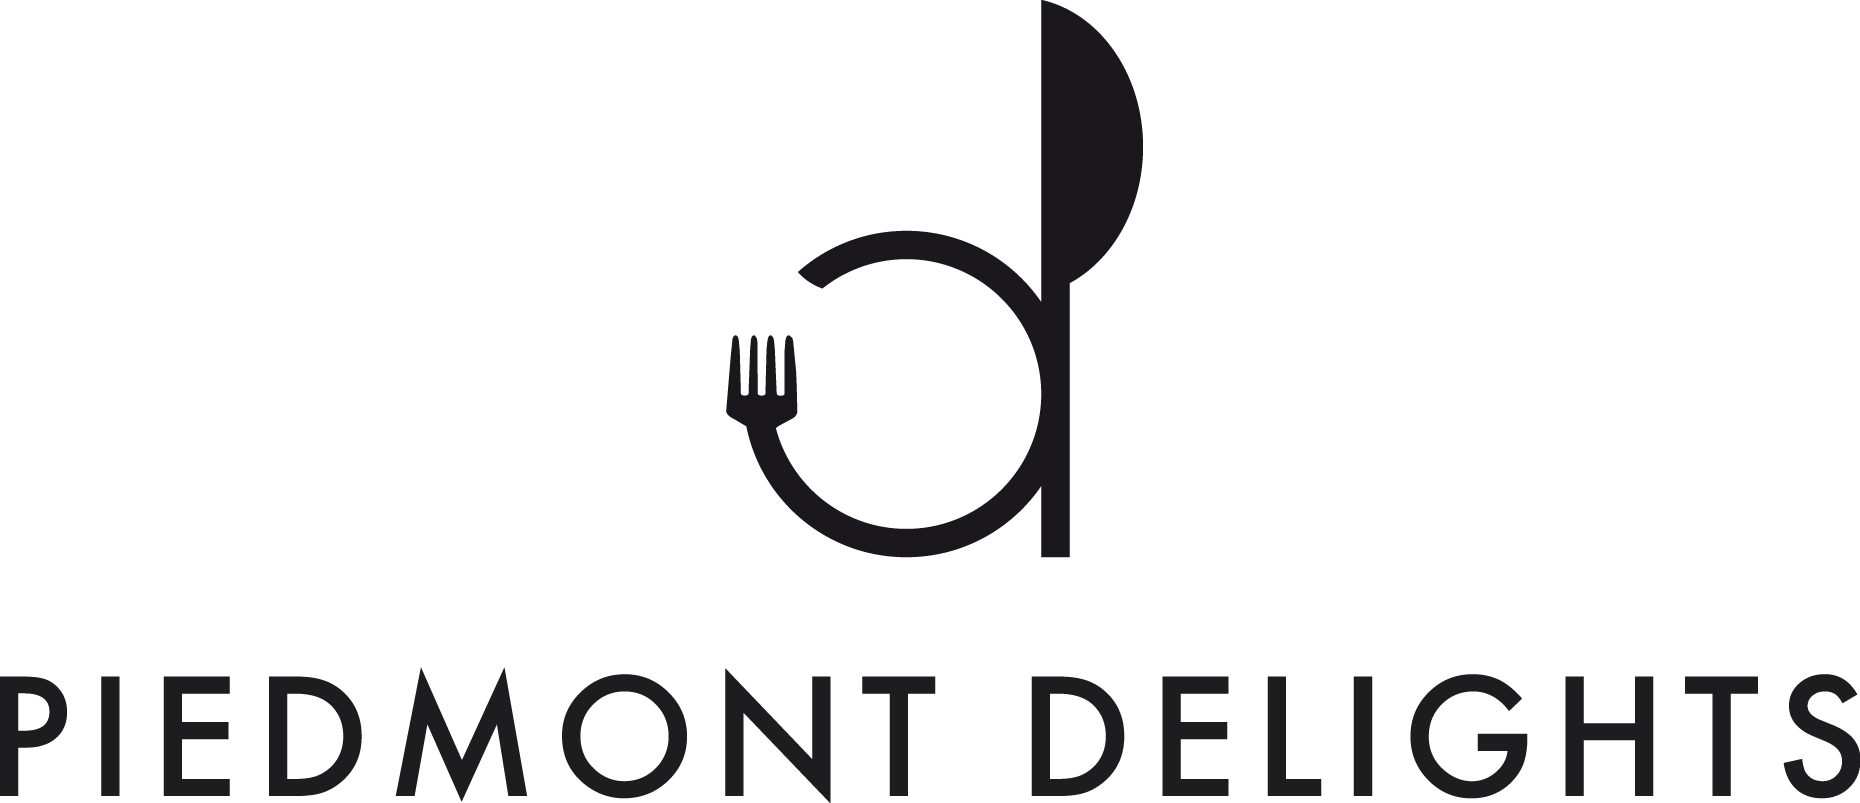 Piedmontese Logo - Piedmont Delights. Online Sale of Typical Piedmont Food and Wine